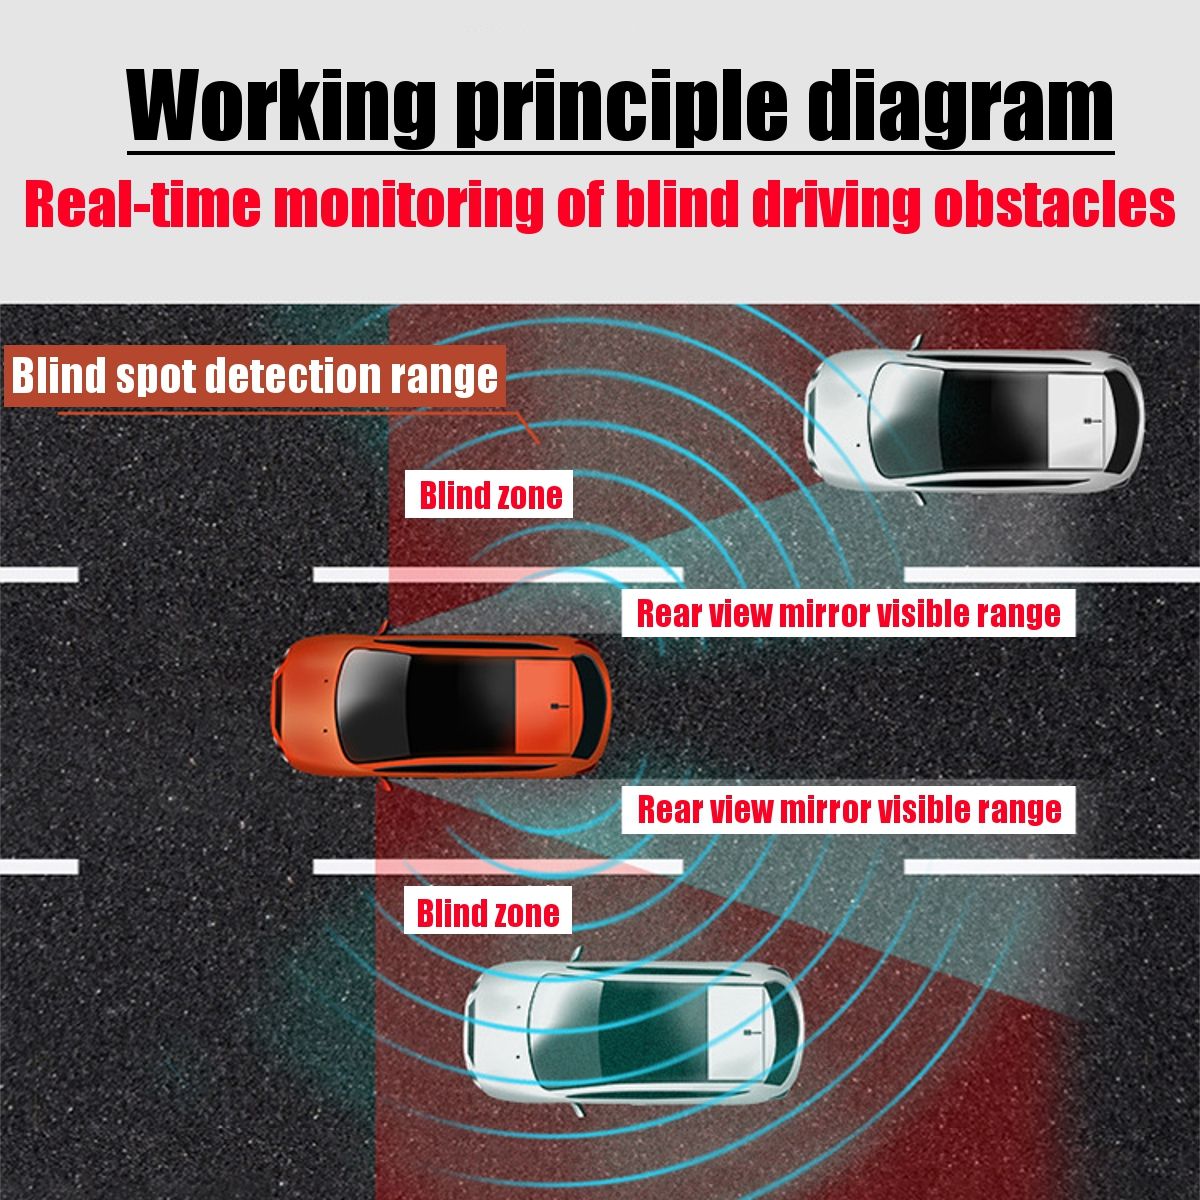 Universal-BSM-Blind-Spot-Monitoring-System-Ultrasonic-Car-Sensor-Radar-Detection-1615523